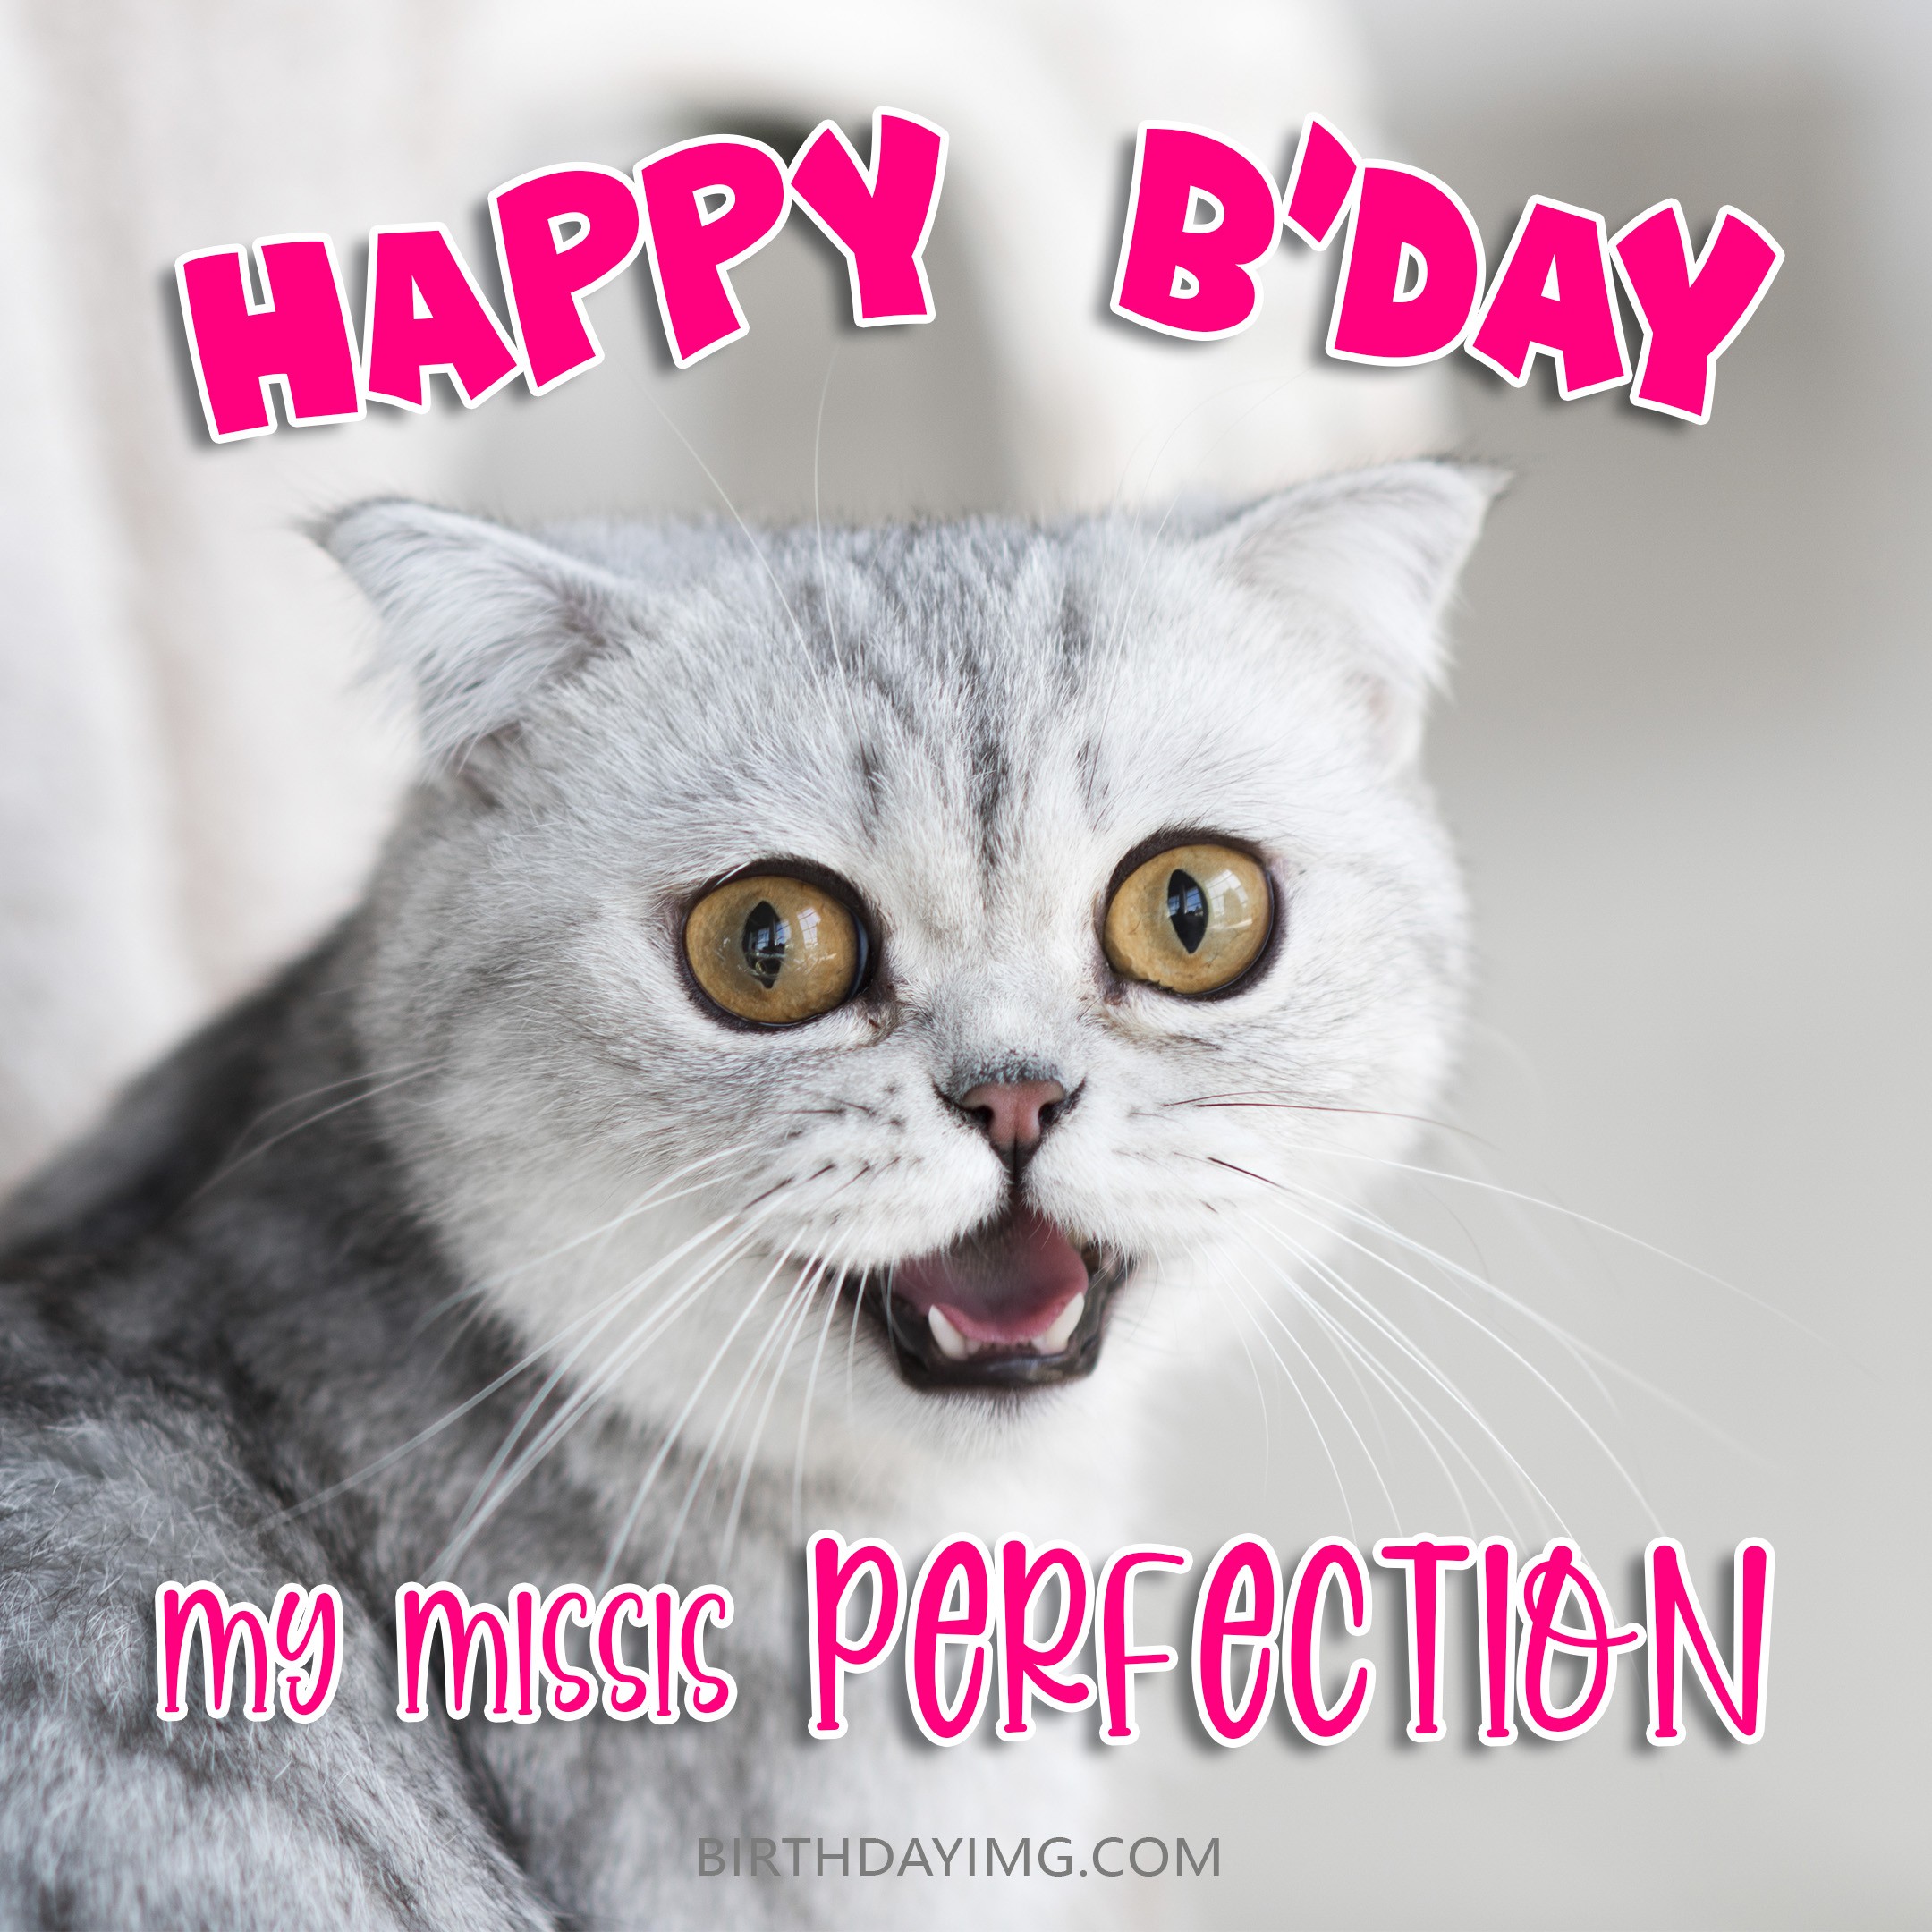 Free Happy Birthday Wife Image with Cute Cat - birthdayimg.com